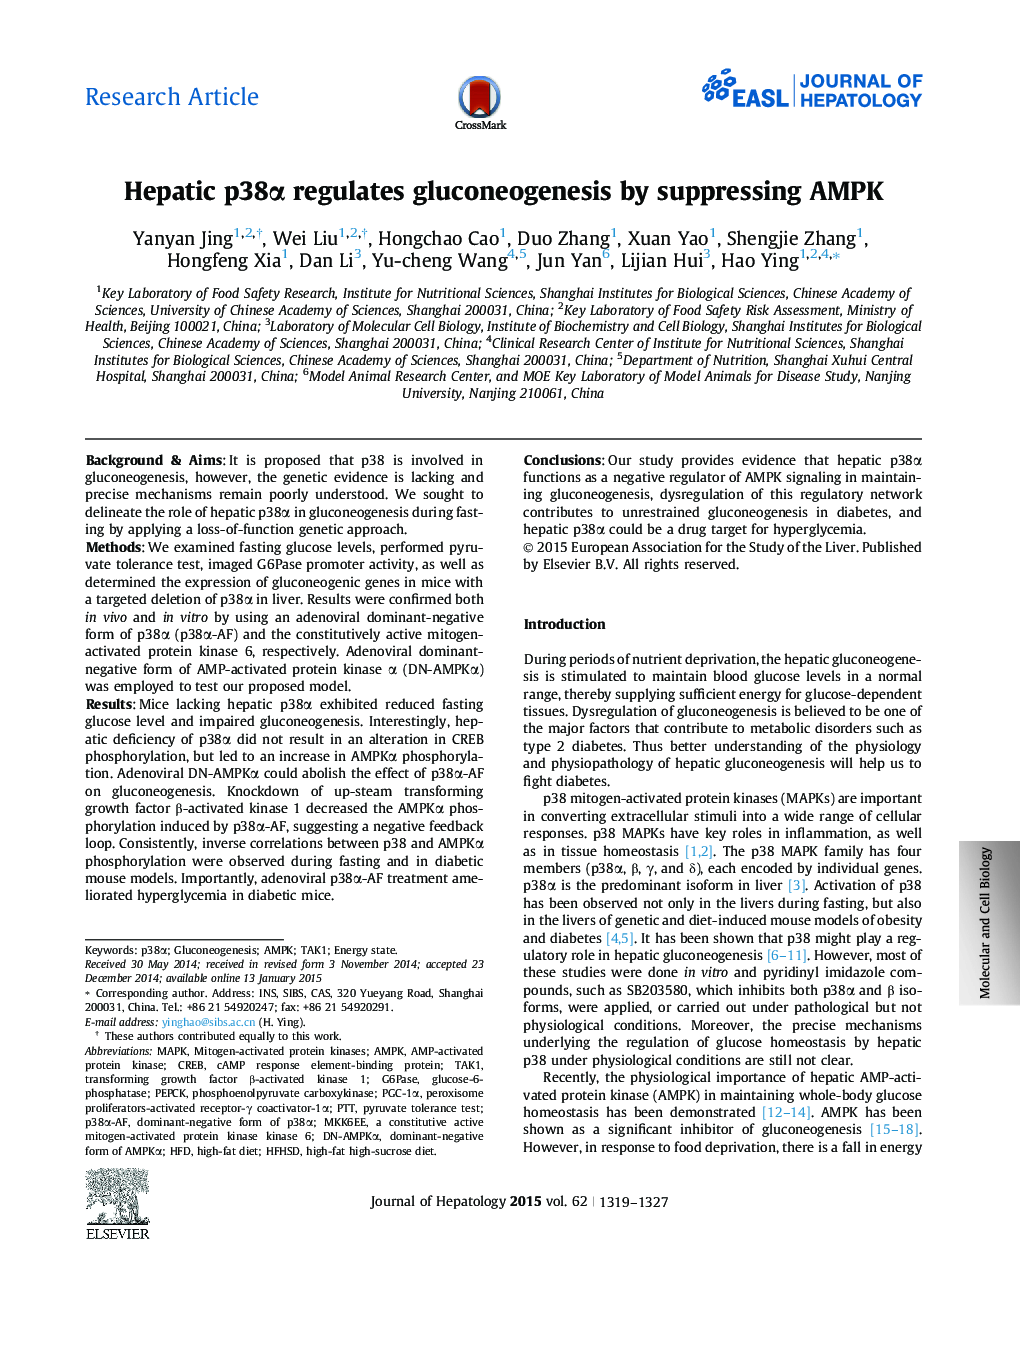 Research ArticleHepatic p38Î± regulates gluconeogenesis by suppressing AMPK